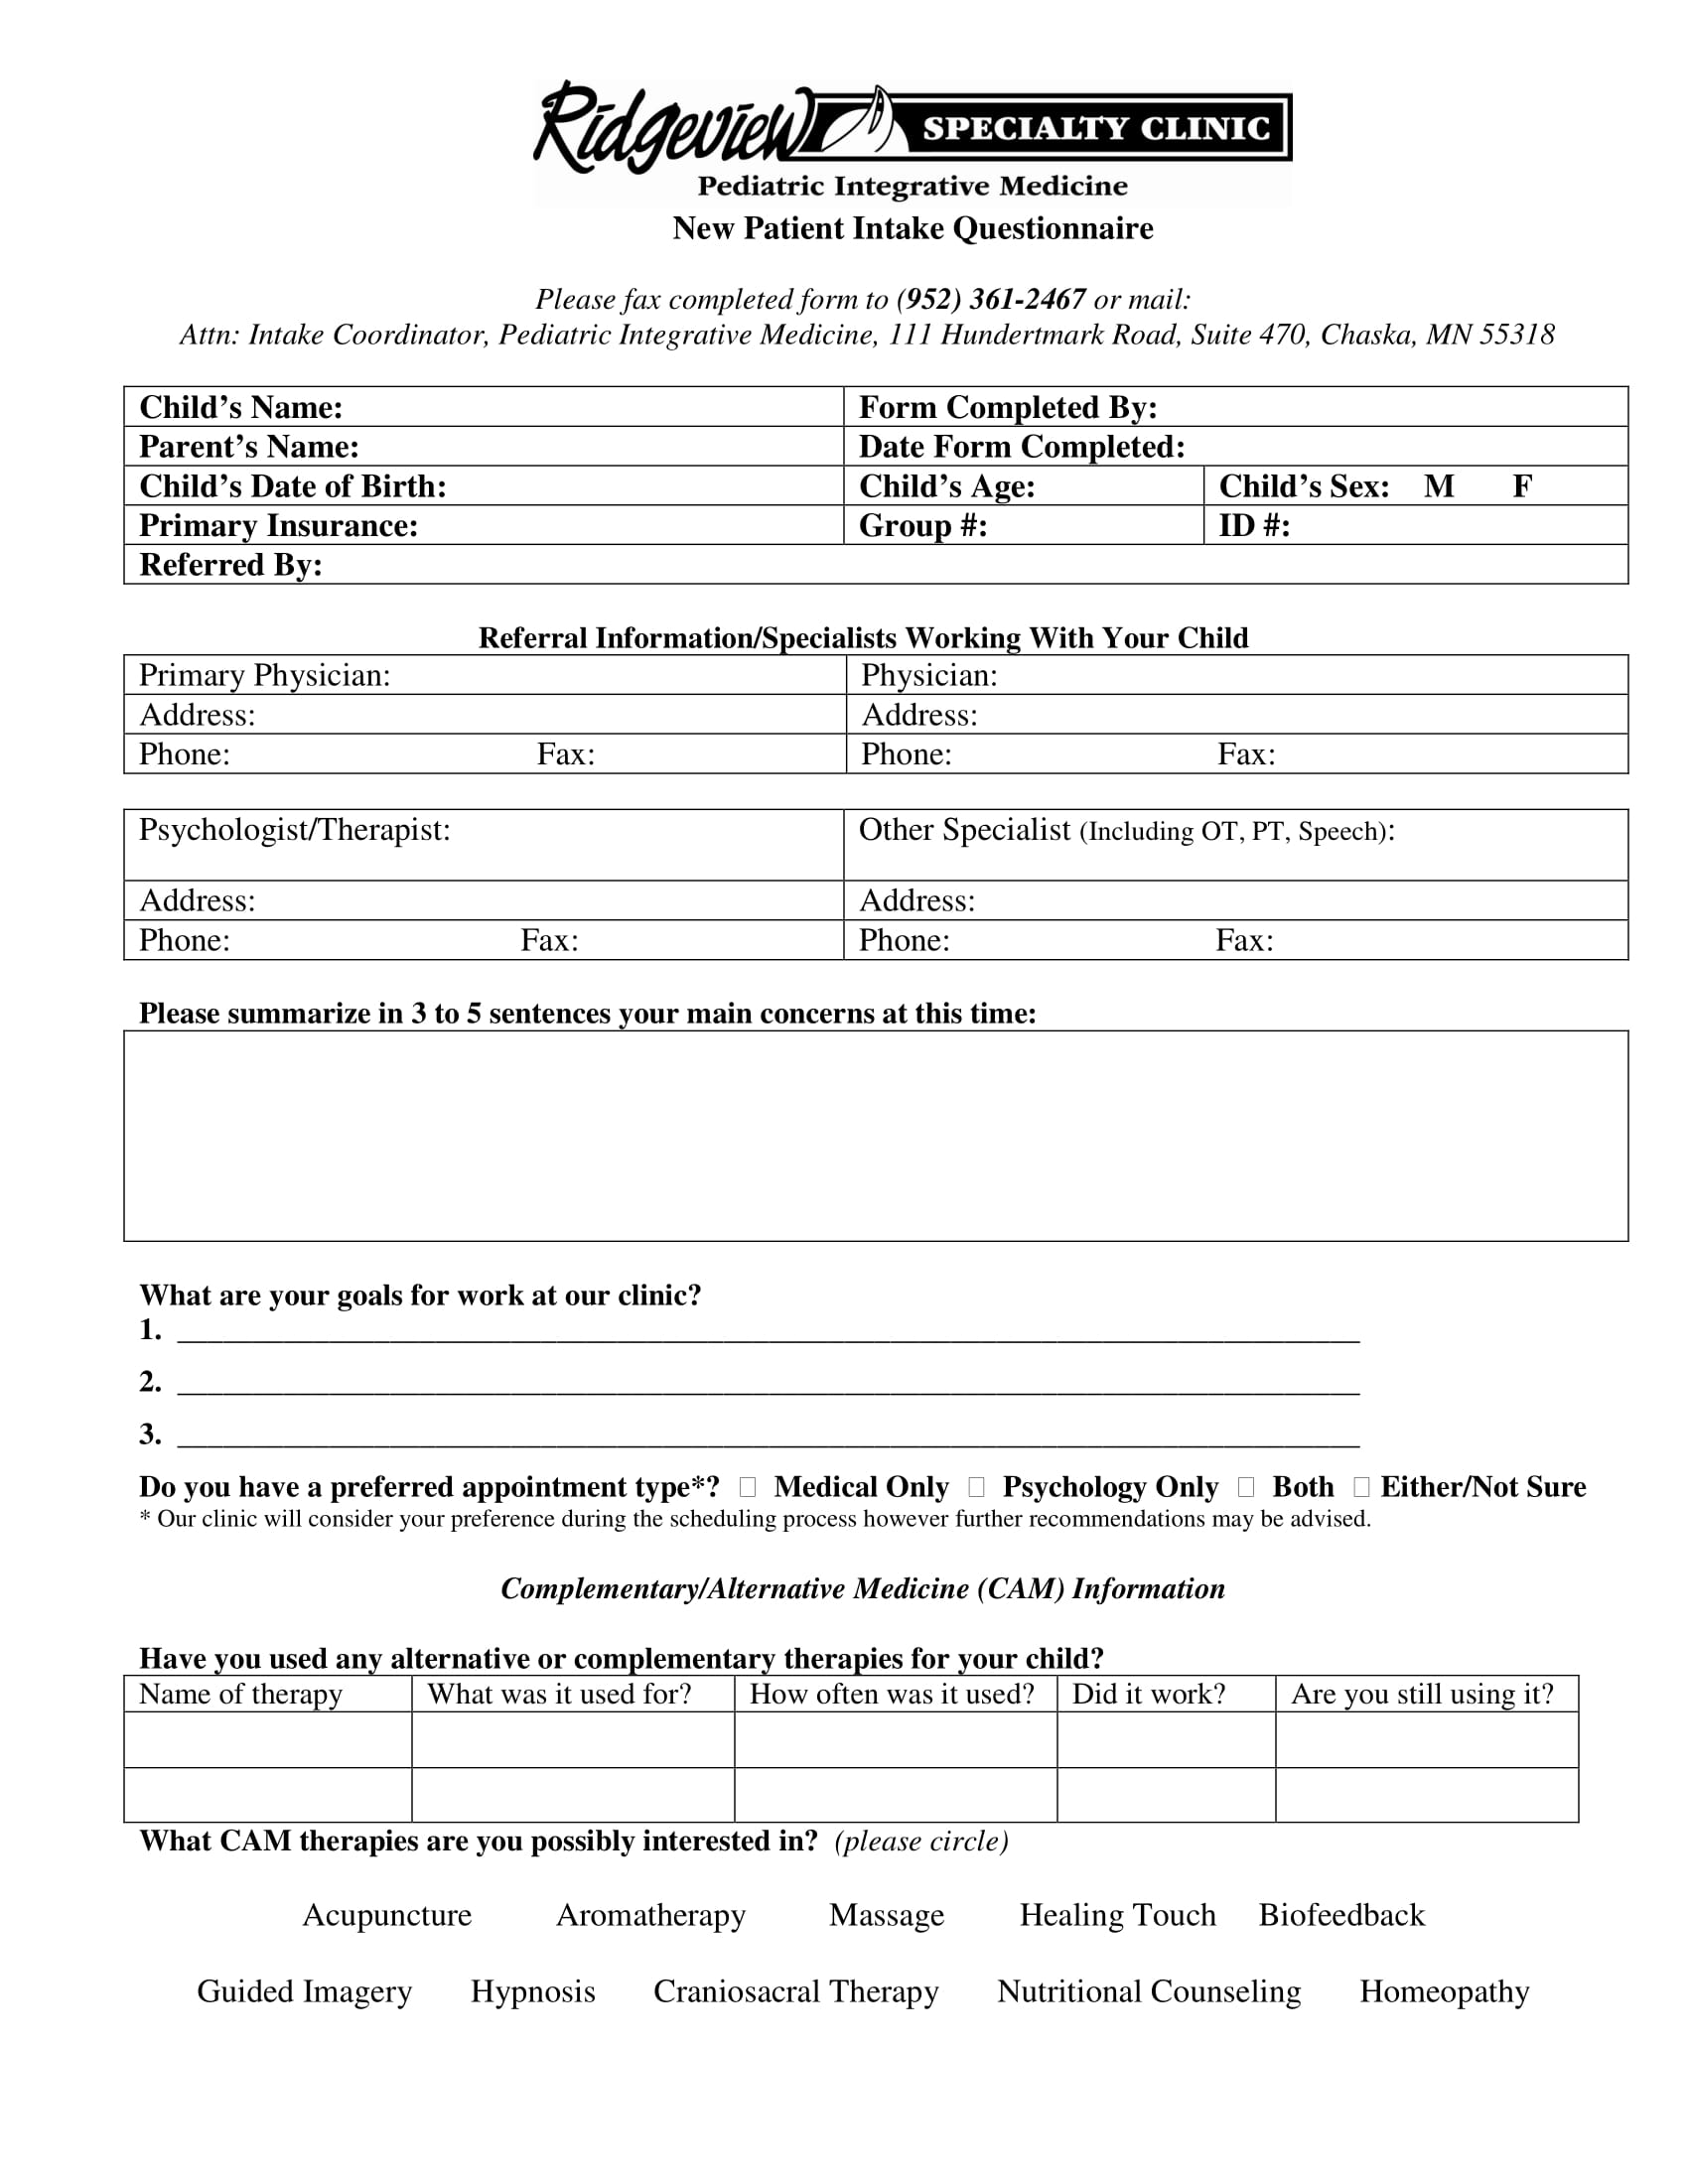 pediatric patient intake questionnaire form 1